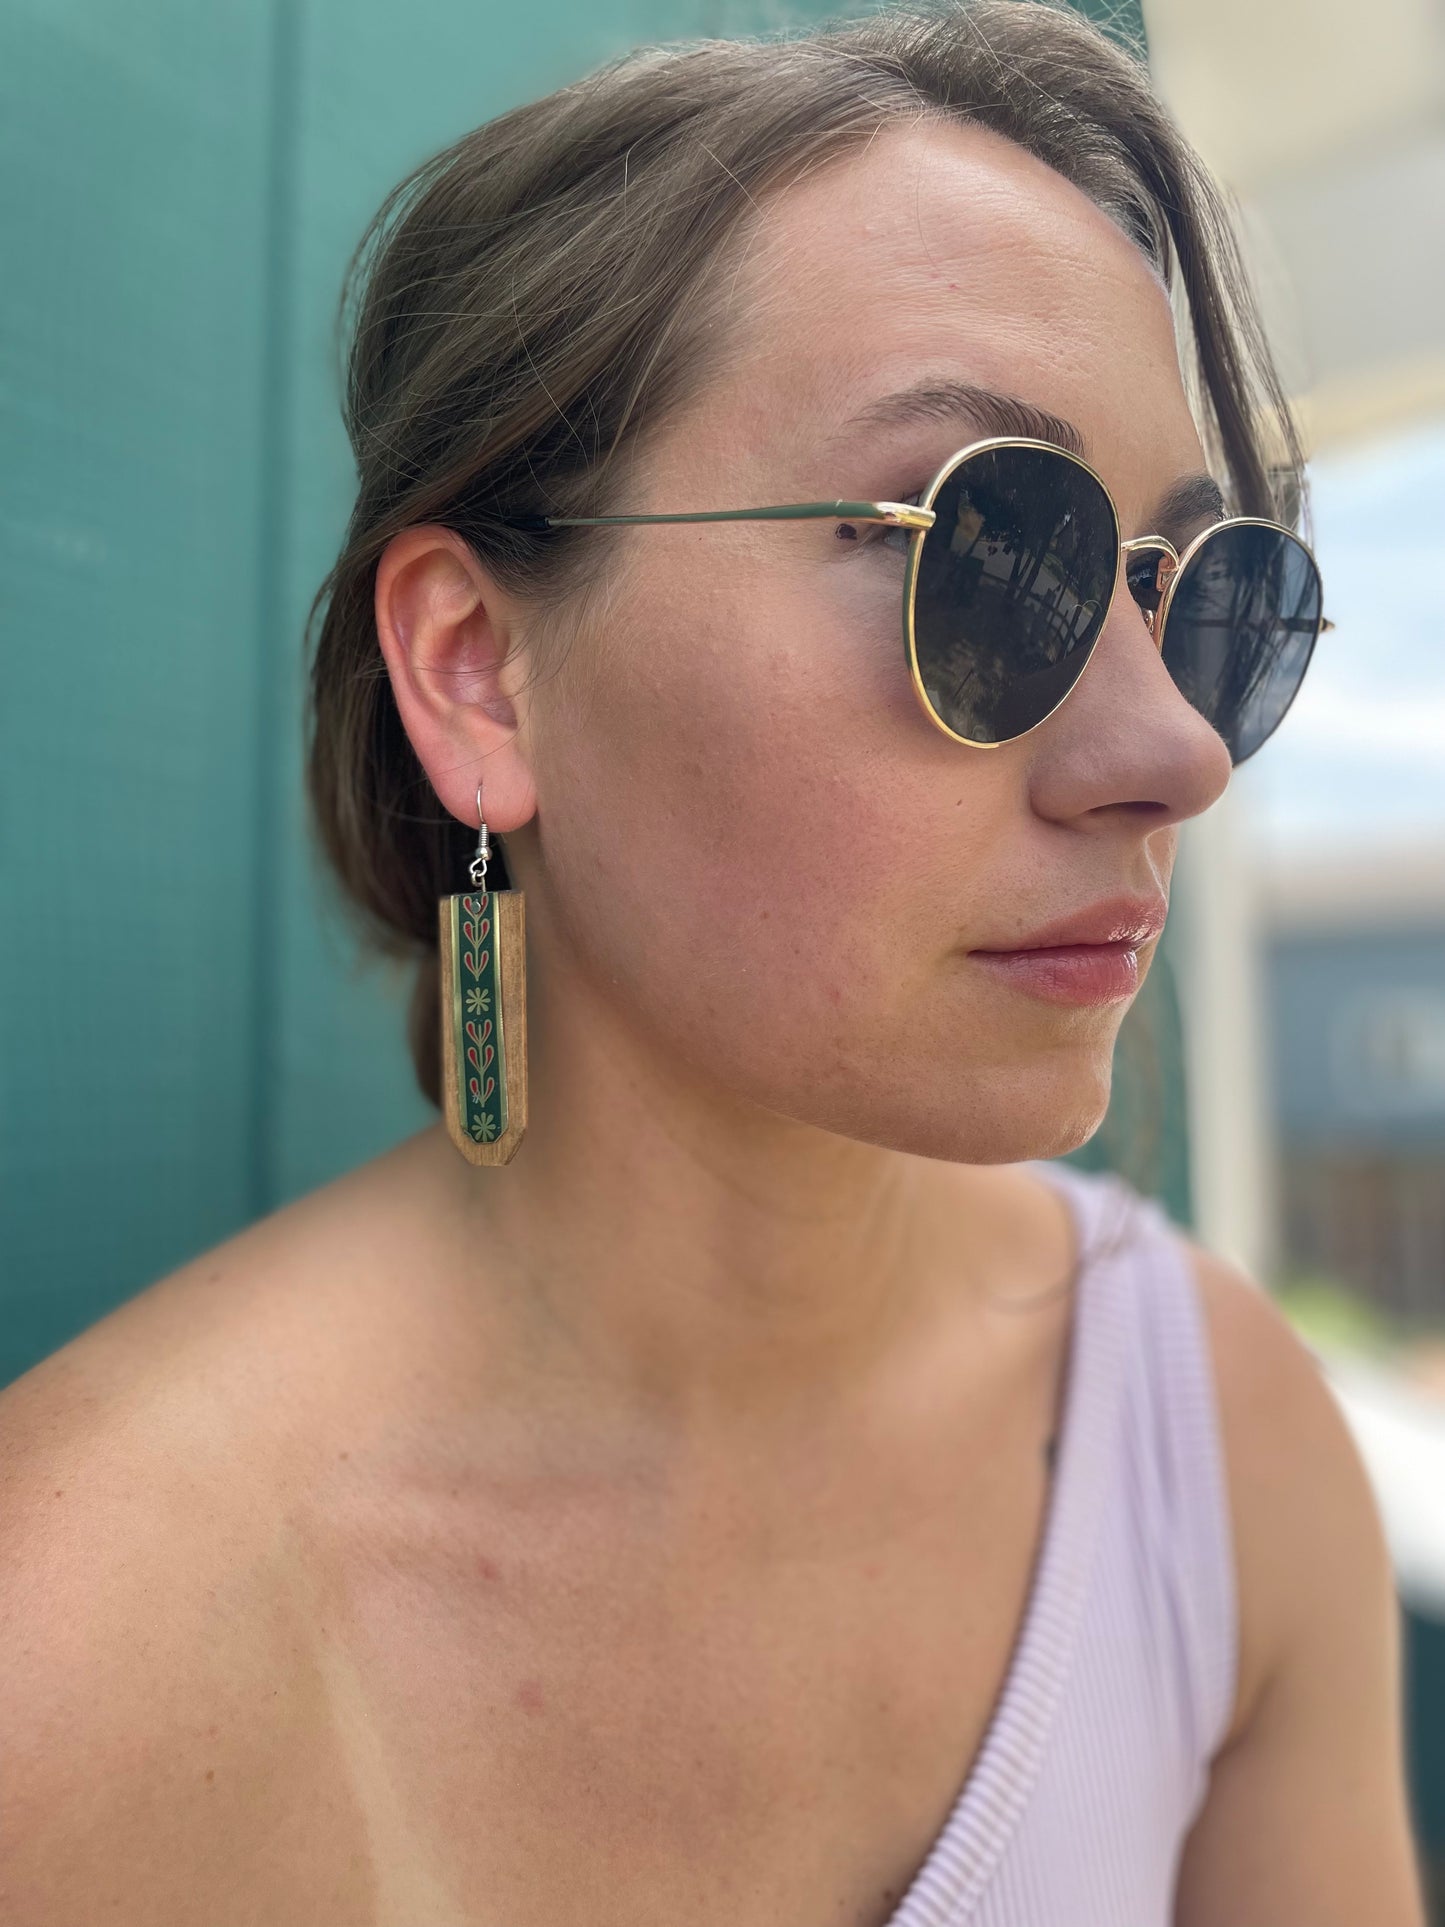 Tin and Wood Earrings